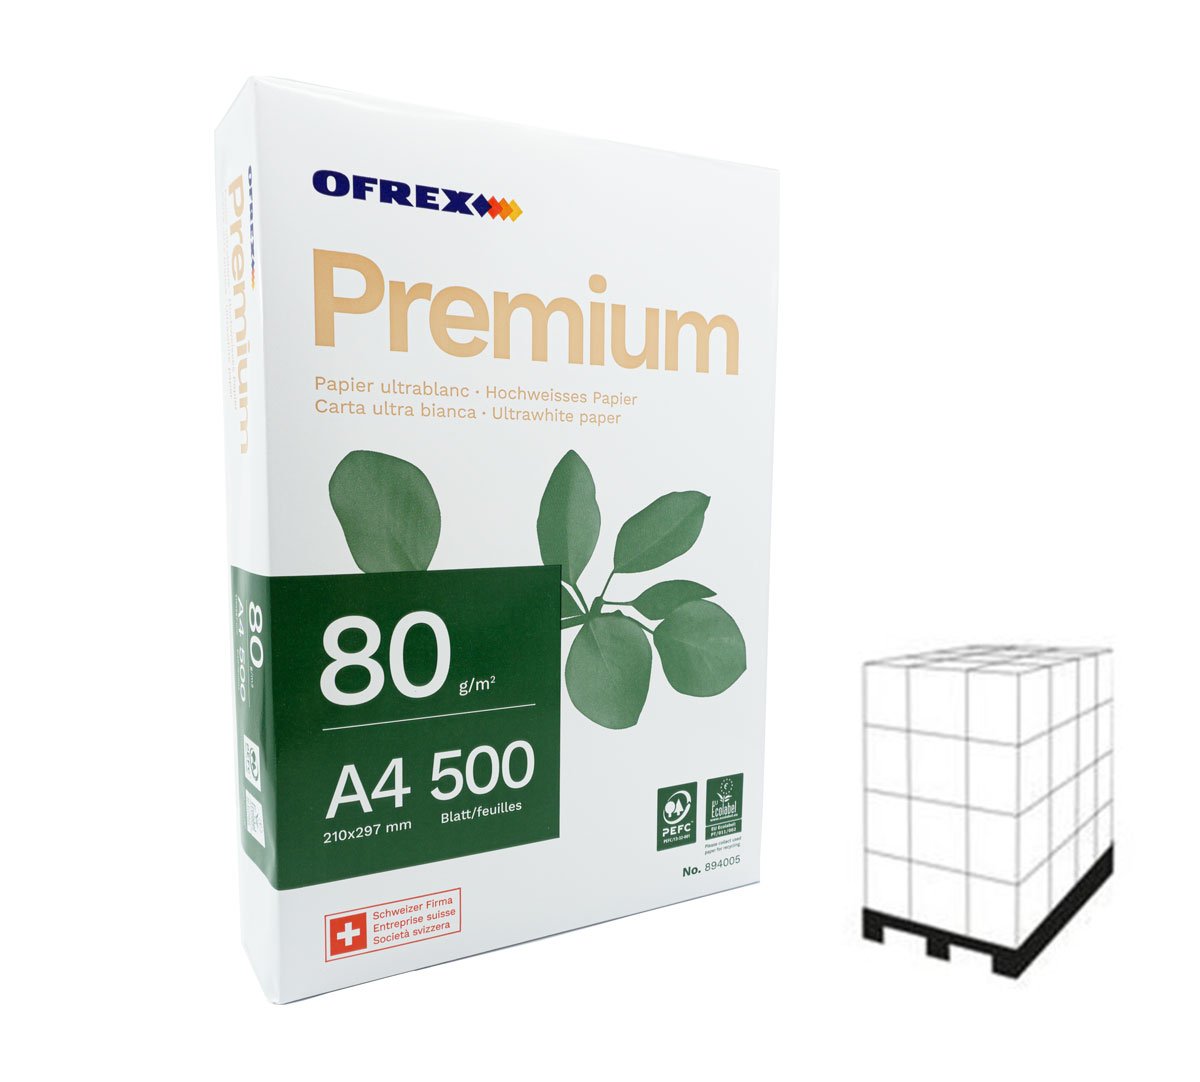 Ofrex Premium Papier A4 PEFC 80gr à 500 hochweiss Pic1